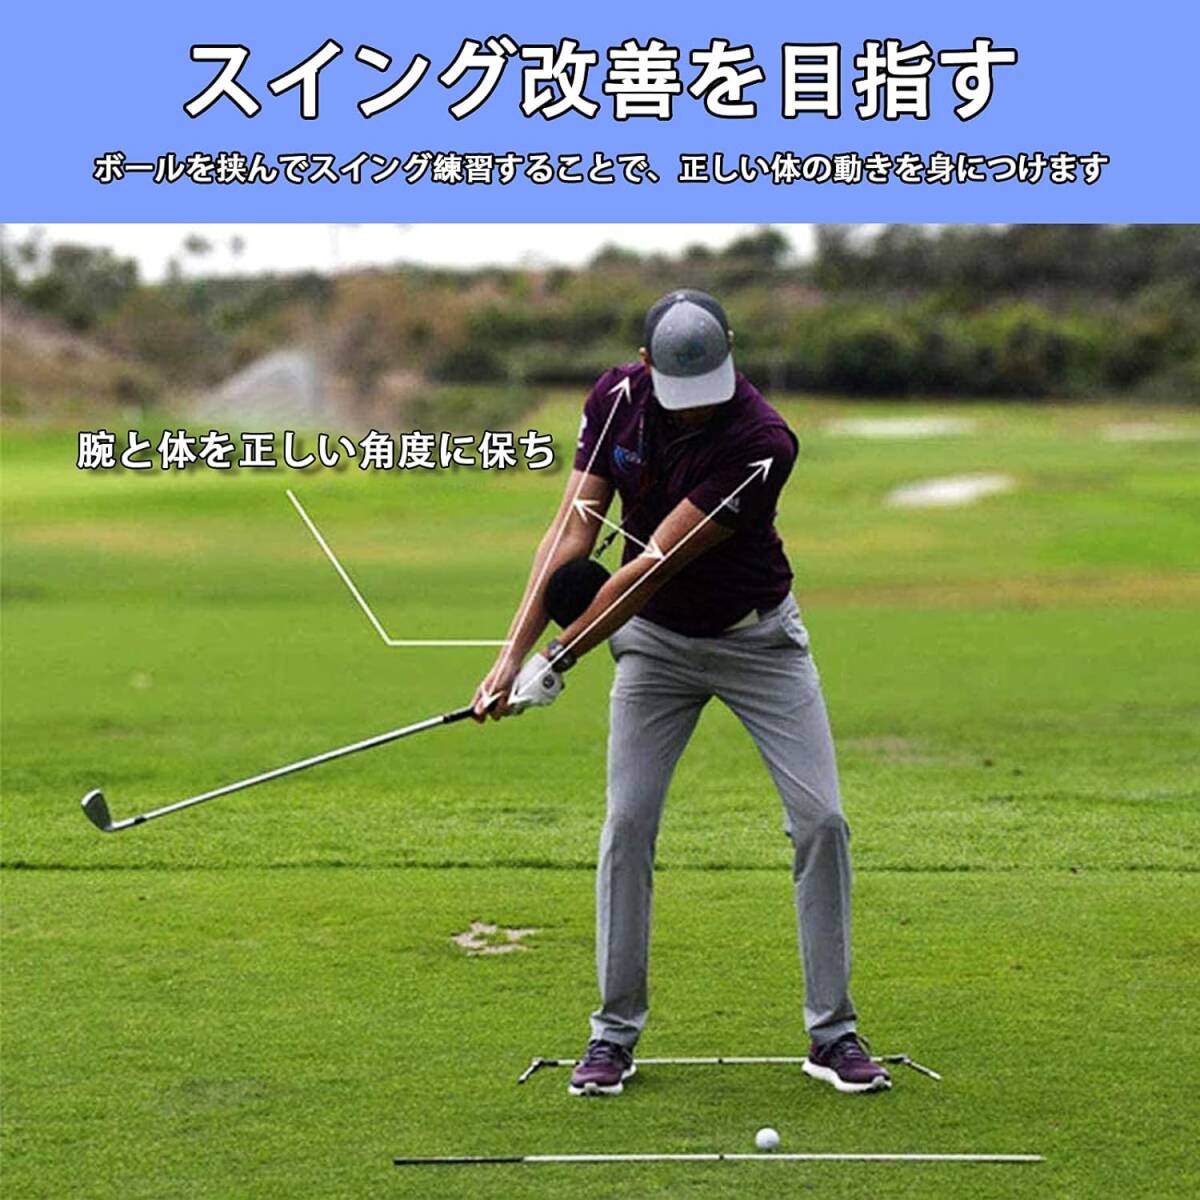 Rouly ゴルフ スイング矯正 練習ボール スイング 練習 ゴルフ矯正サポート 姿勢矯正 ゴルフ練習器具 エアポンプ付き_画像2